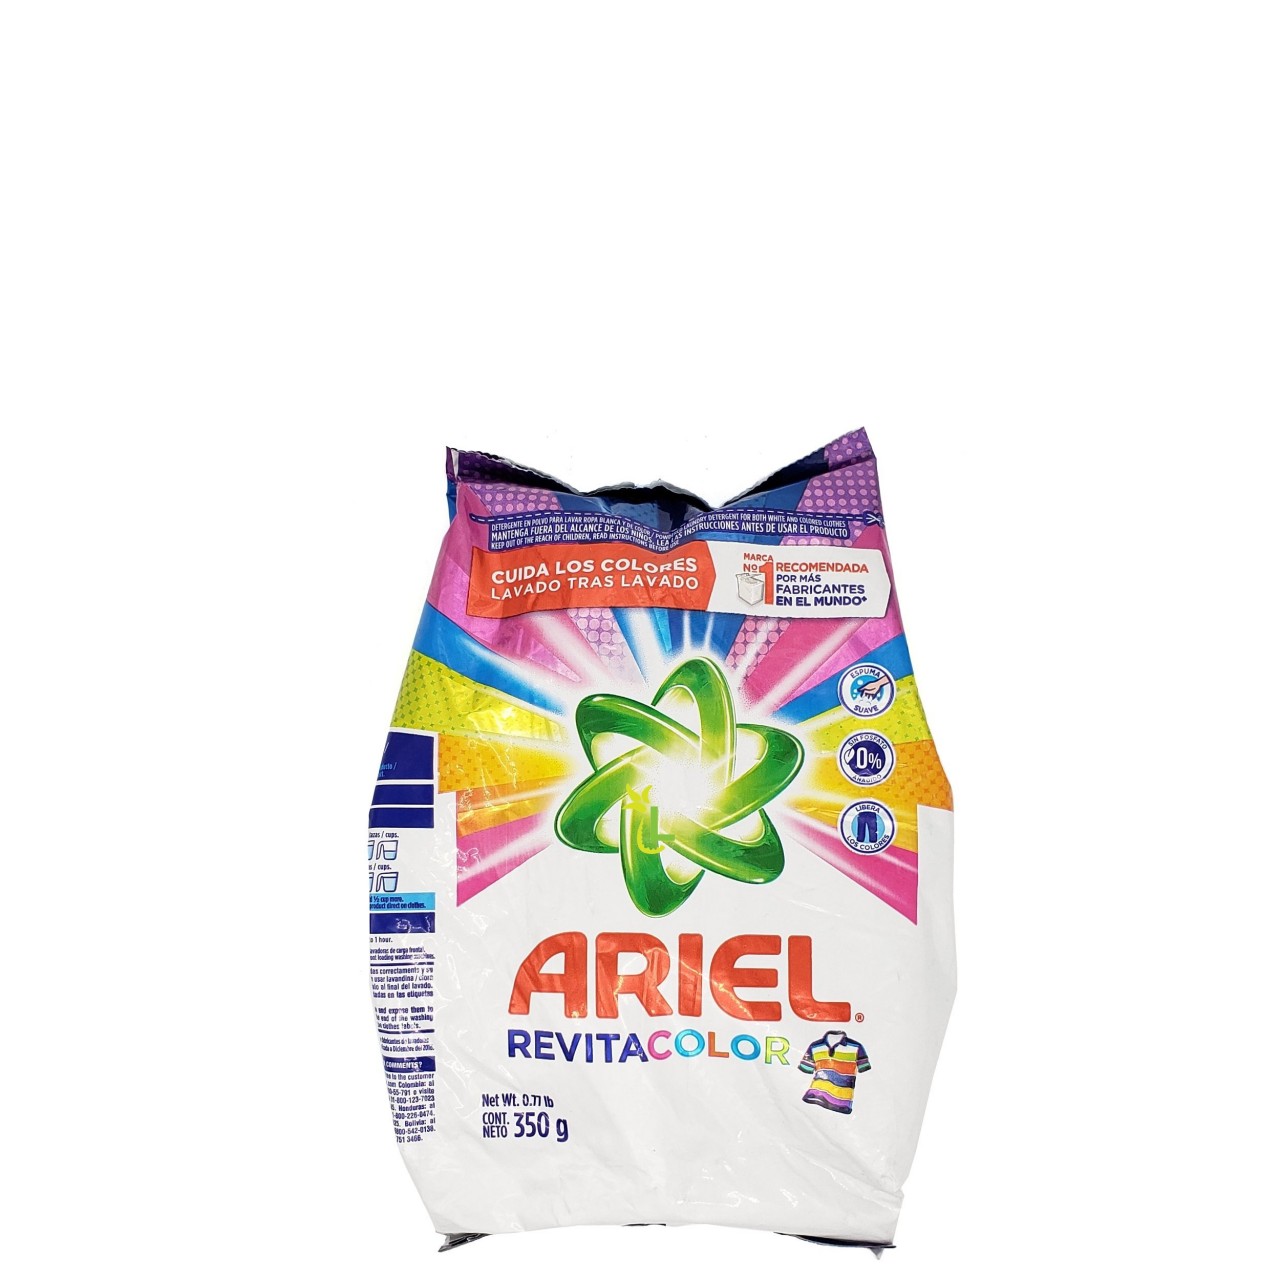 Ariel Detergent Revitacolor